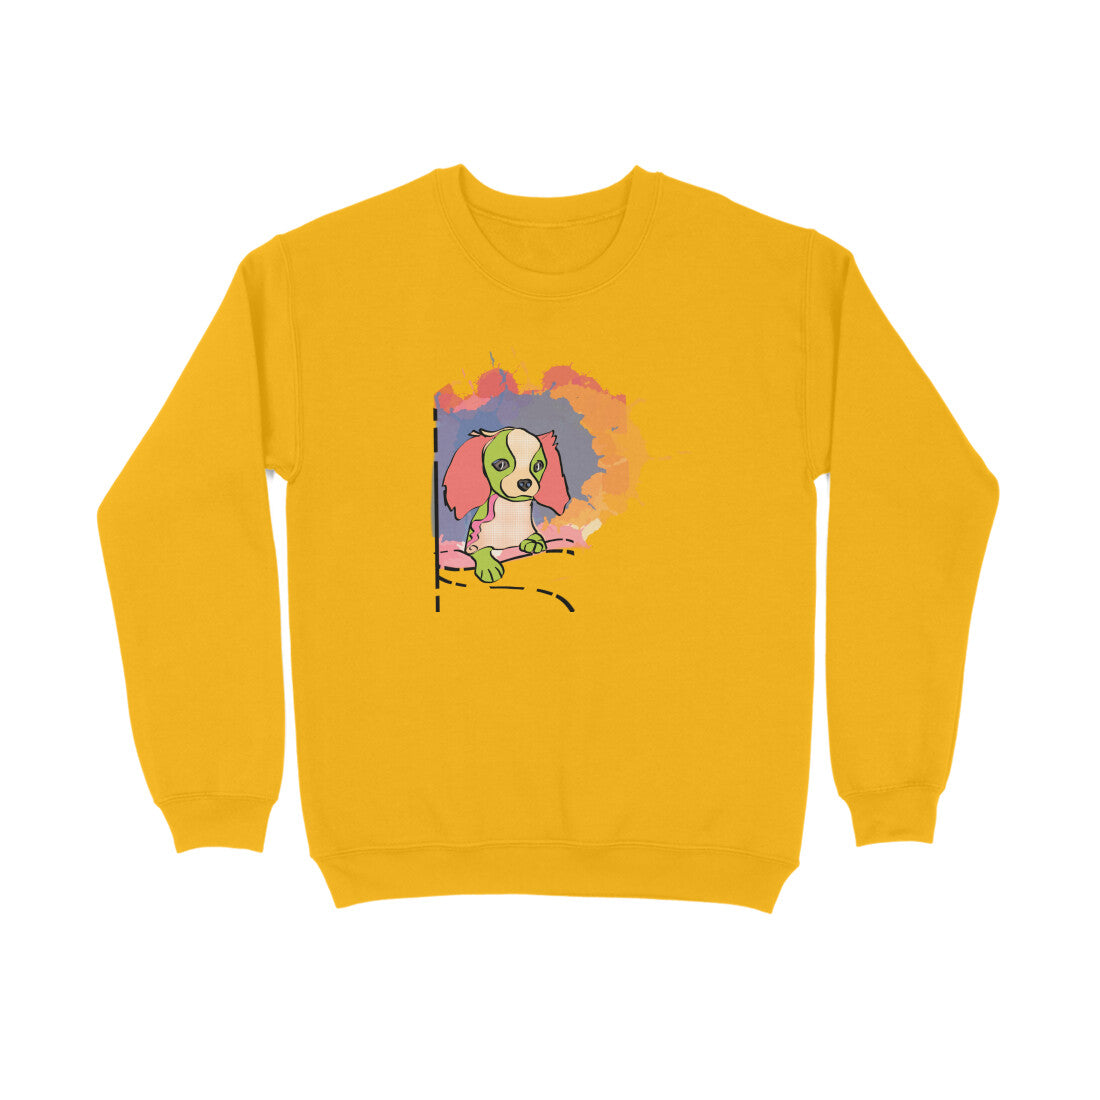 Stepevoli Clothing - Sweatshirt (Unisex) - Cavalier King Charles Spaniel (7 Colours)